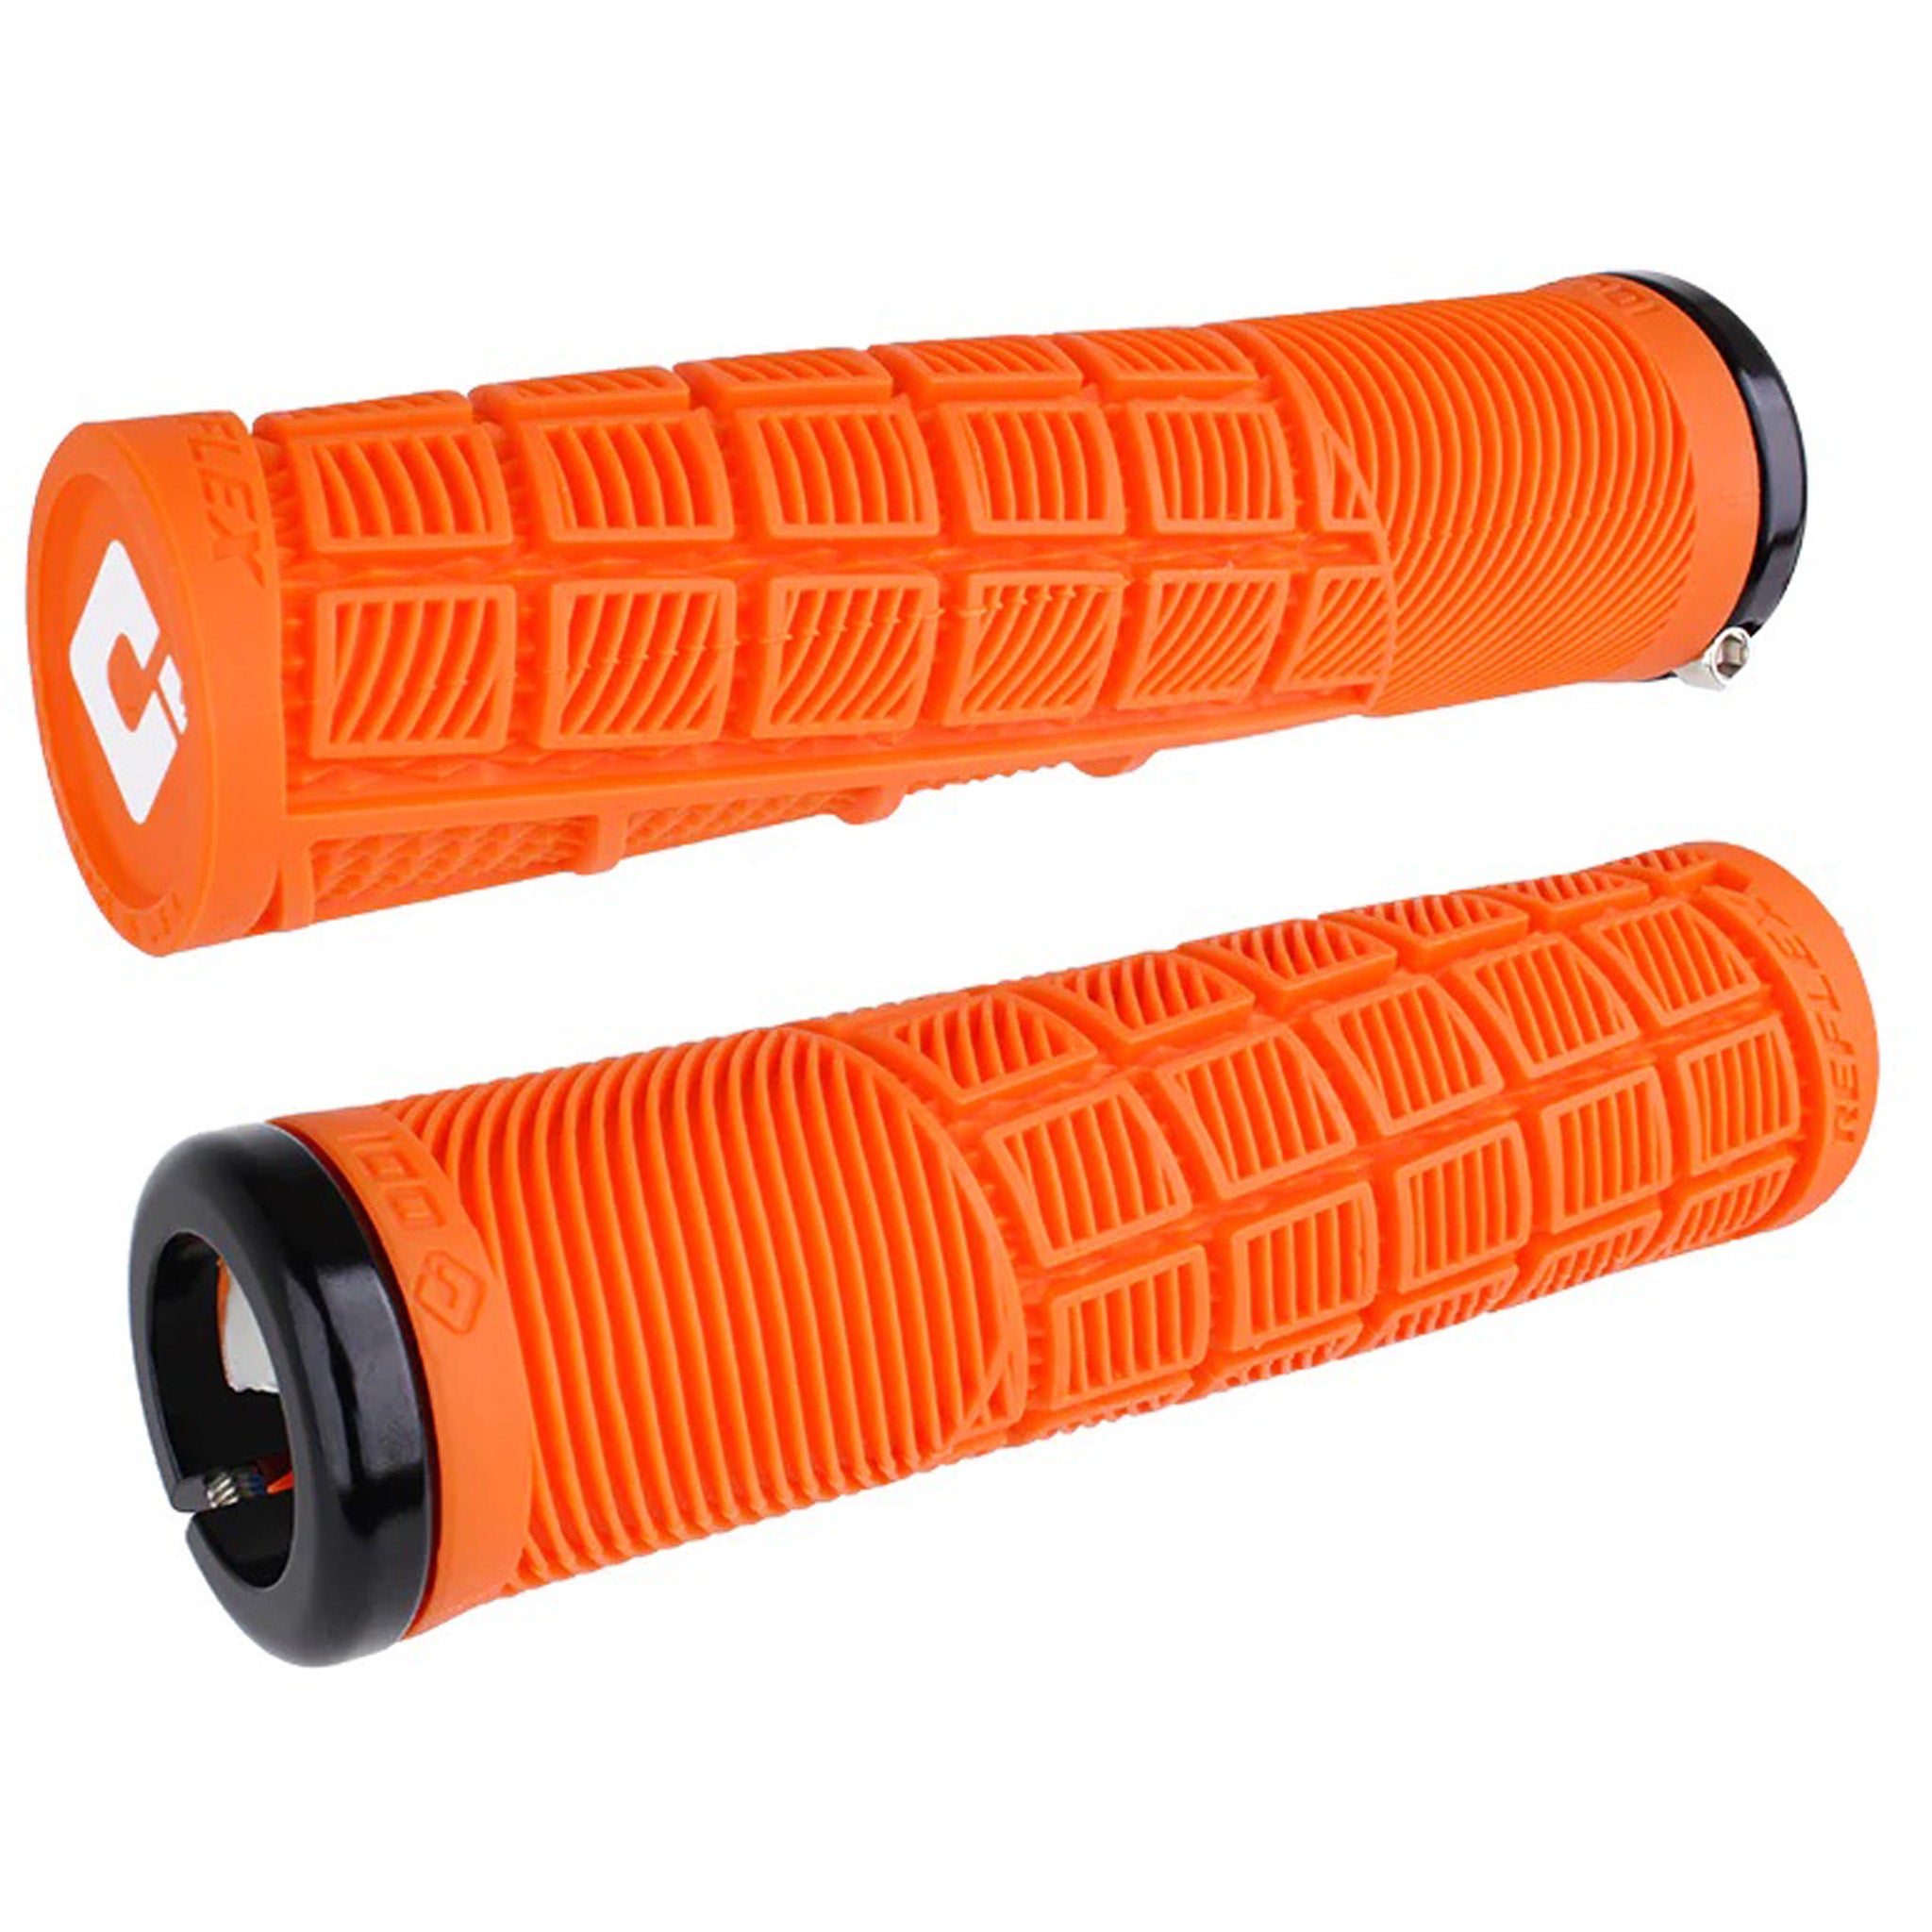 ODI Lock-On MTB Reflex Grip - Orange/Black